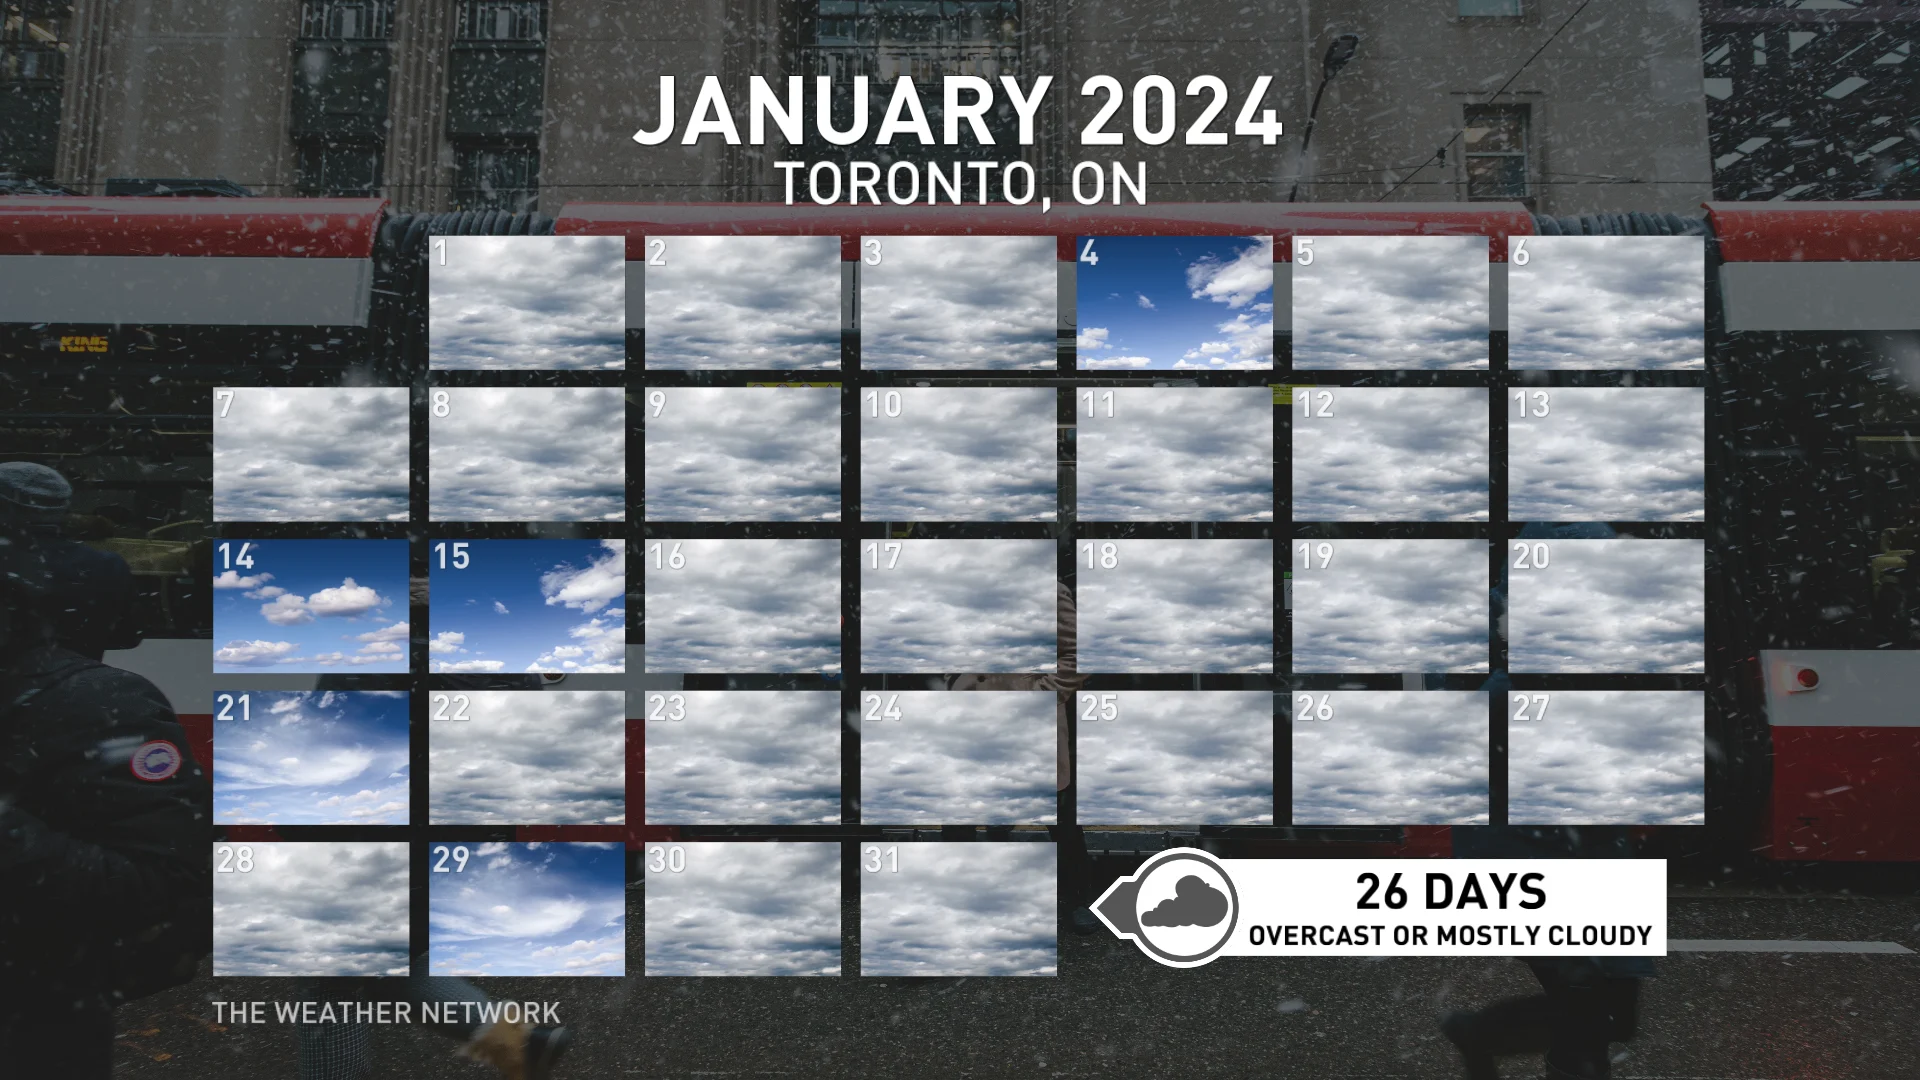 Baron - January cloud calendar.jpg